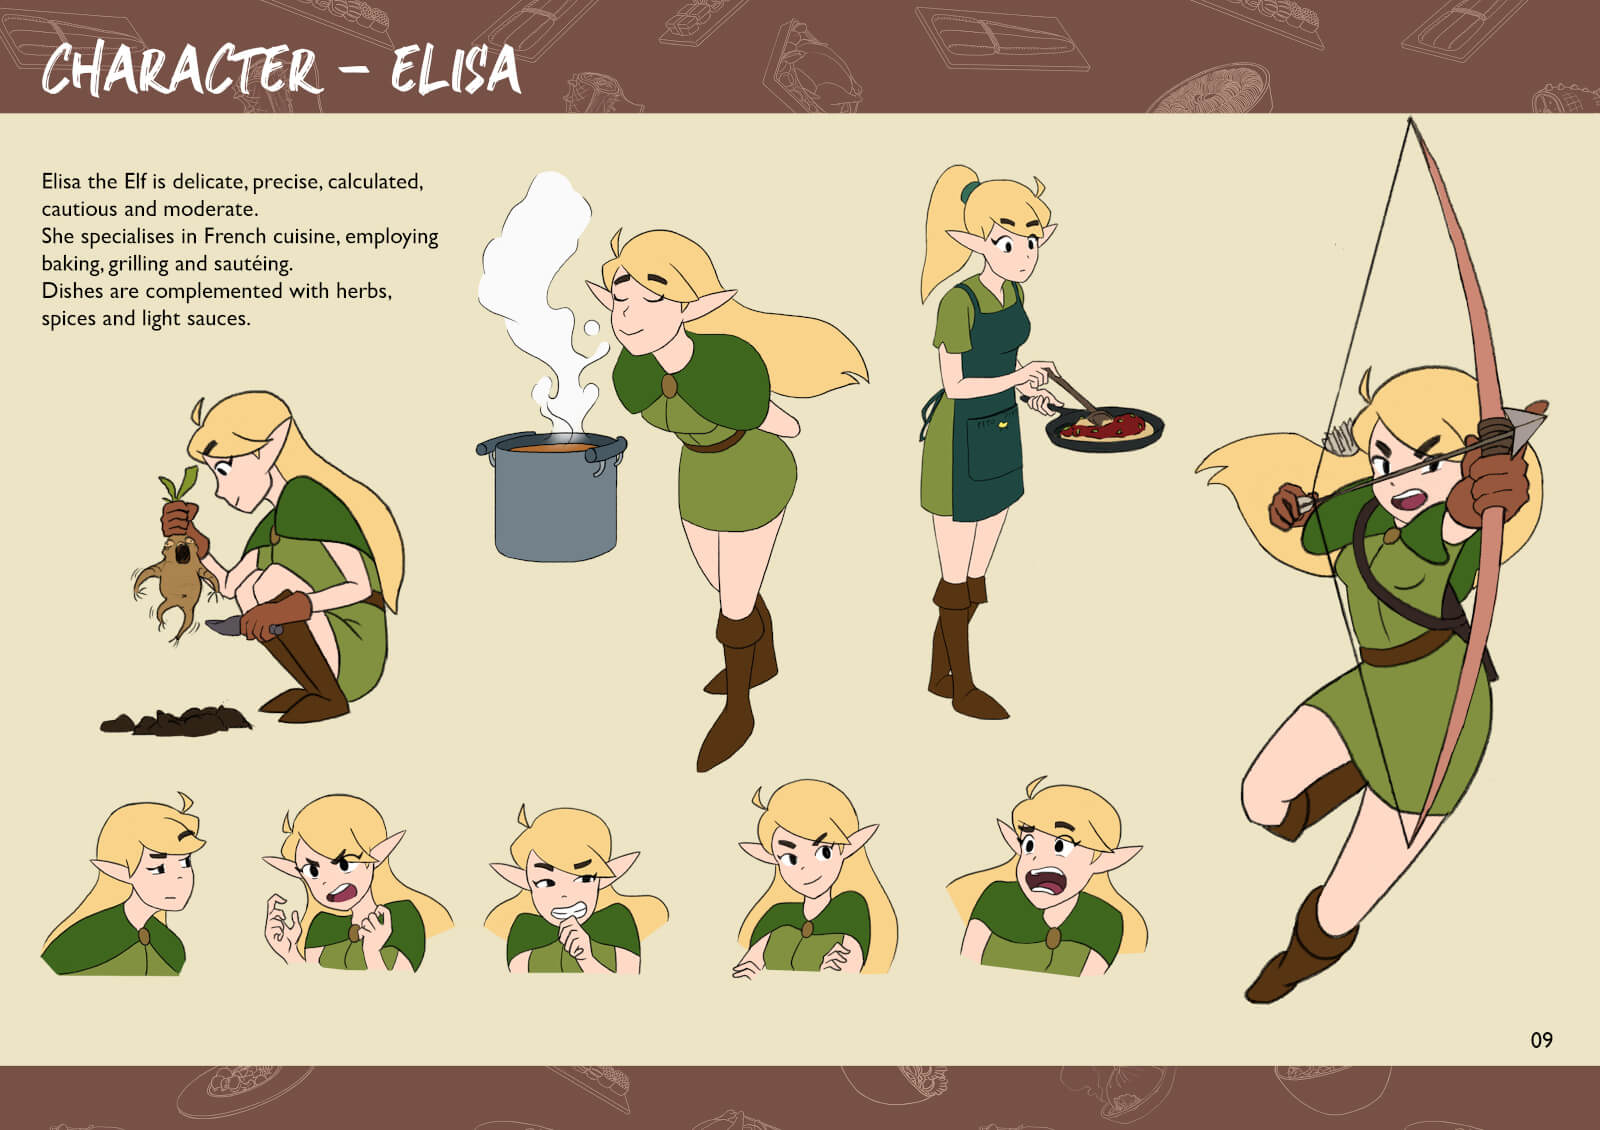 Elf character doing various activities and facial gestures